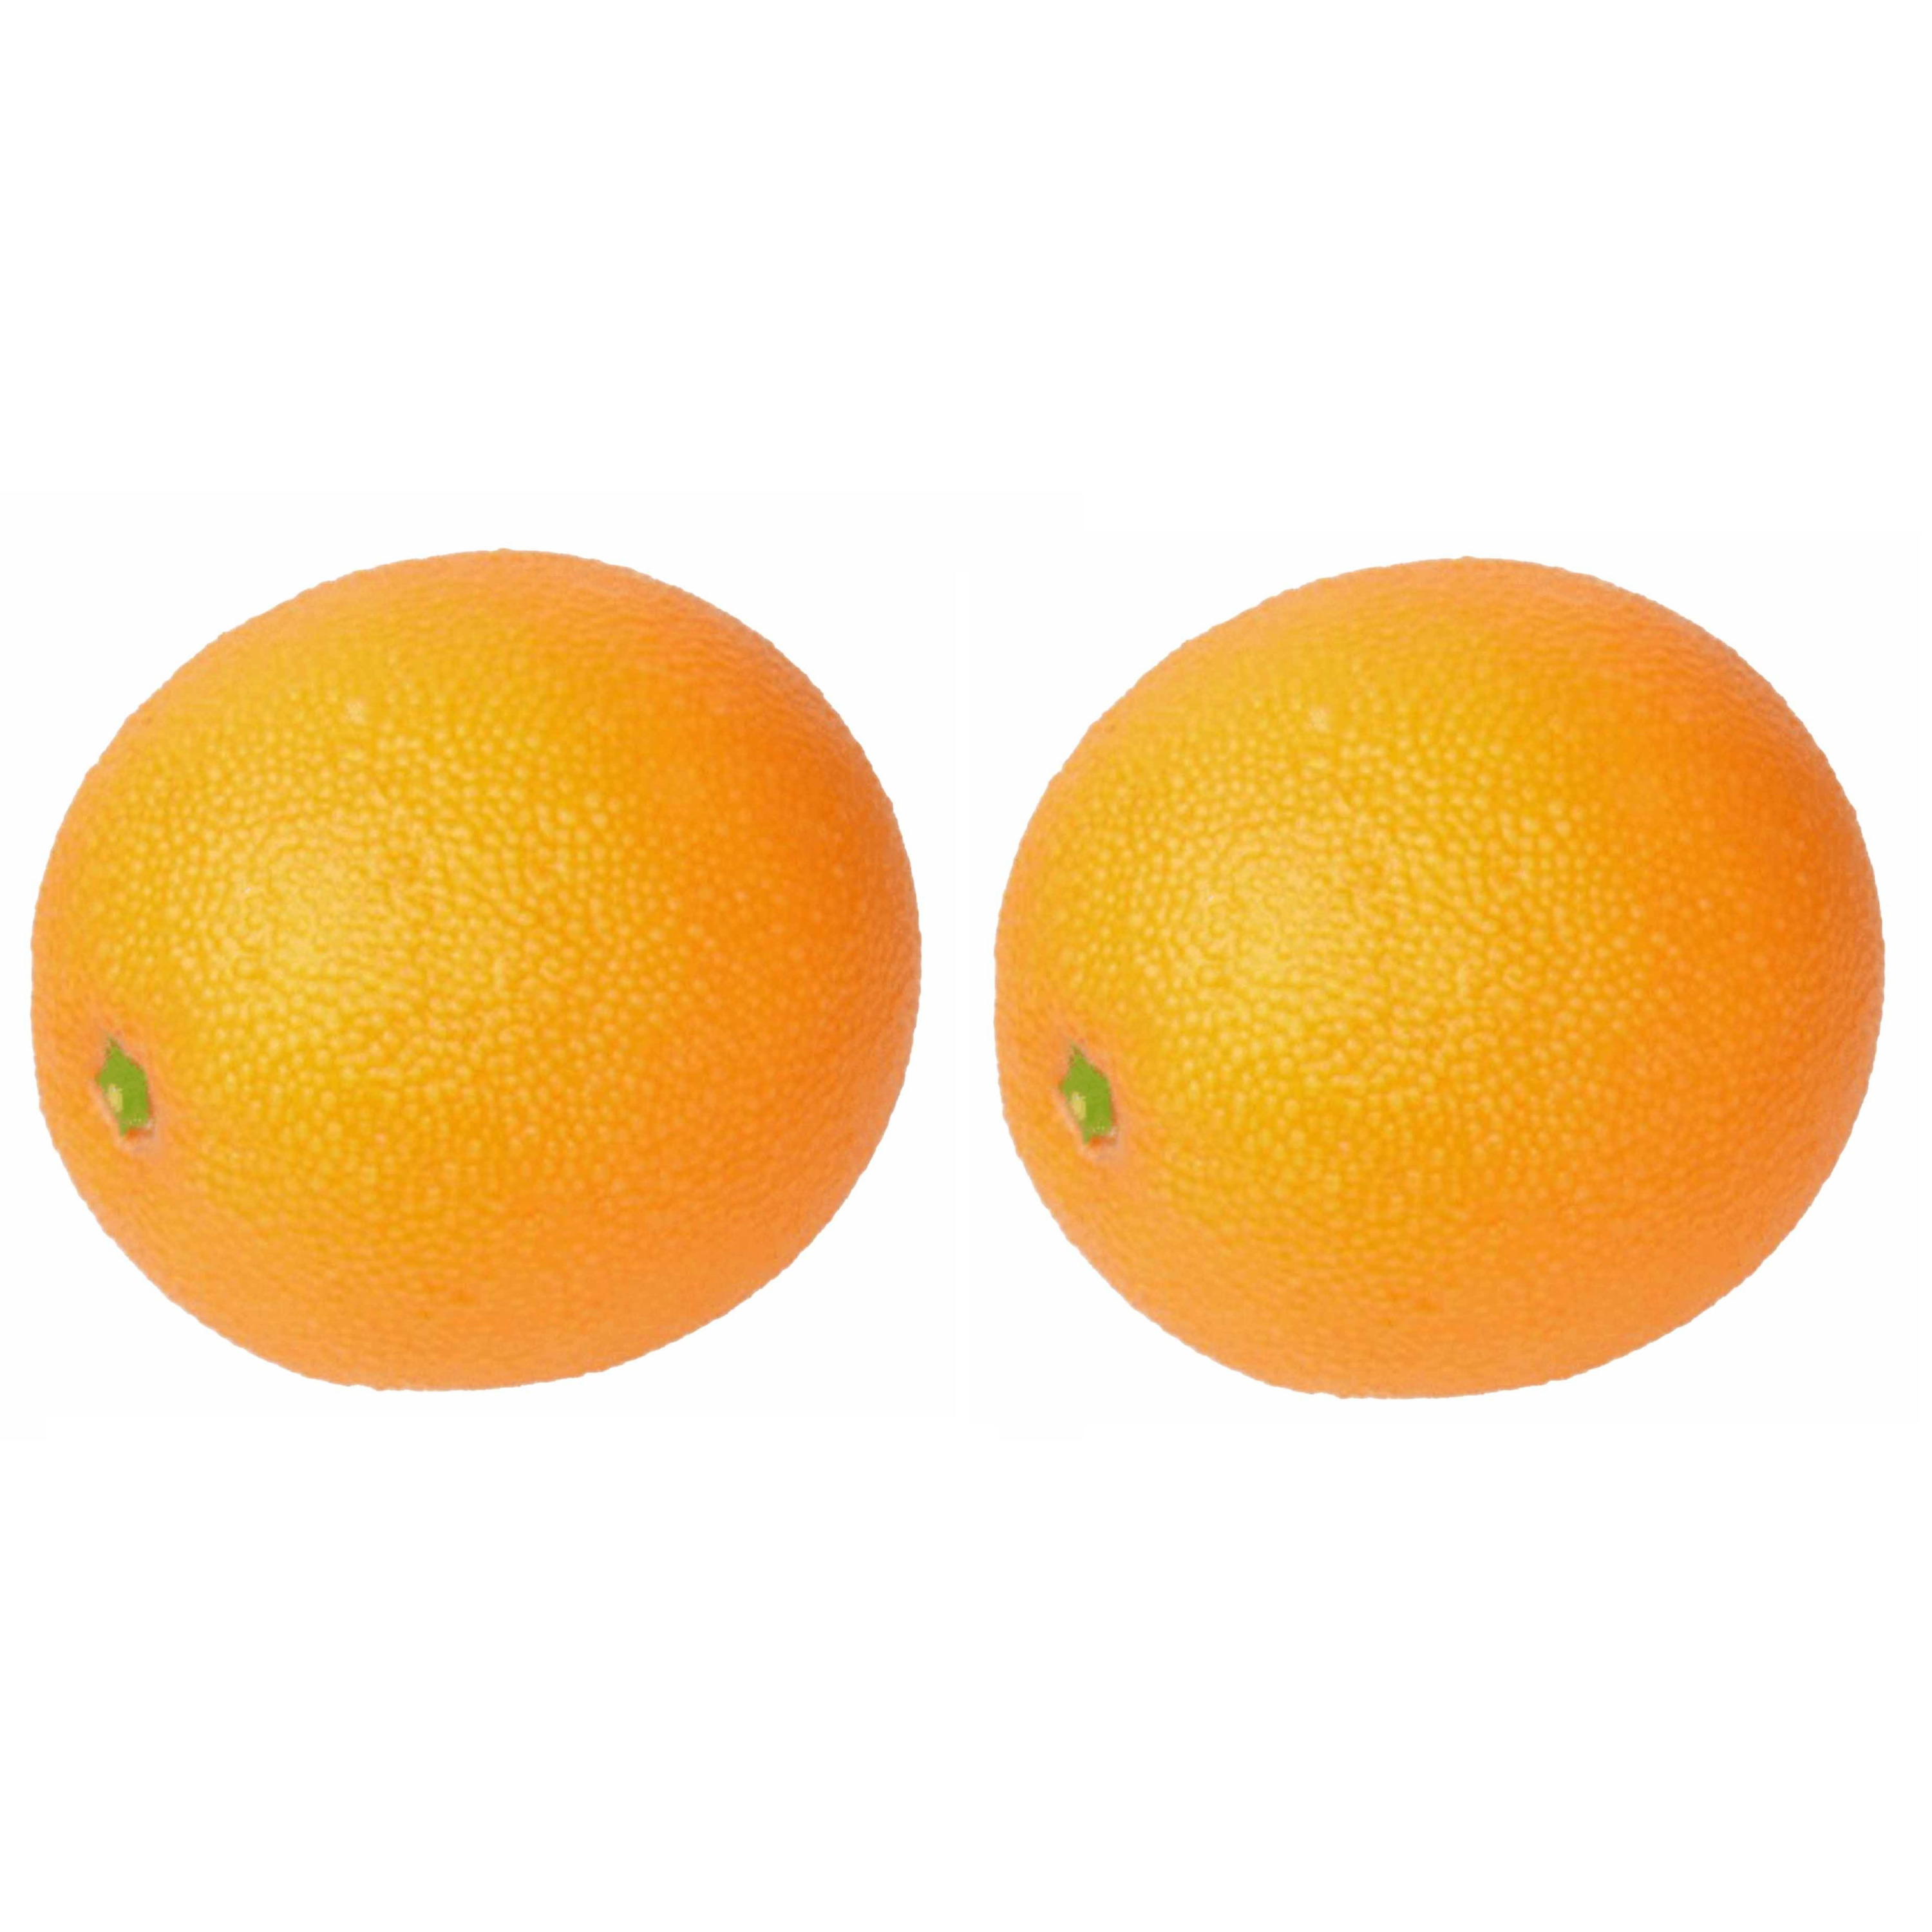 Set van 6x stuks kunst-Namaak fruit sinaasappels van 8 cm